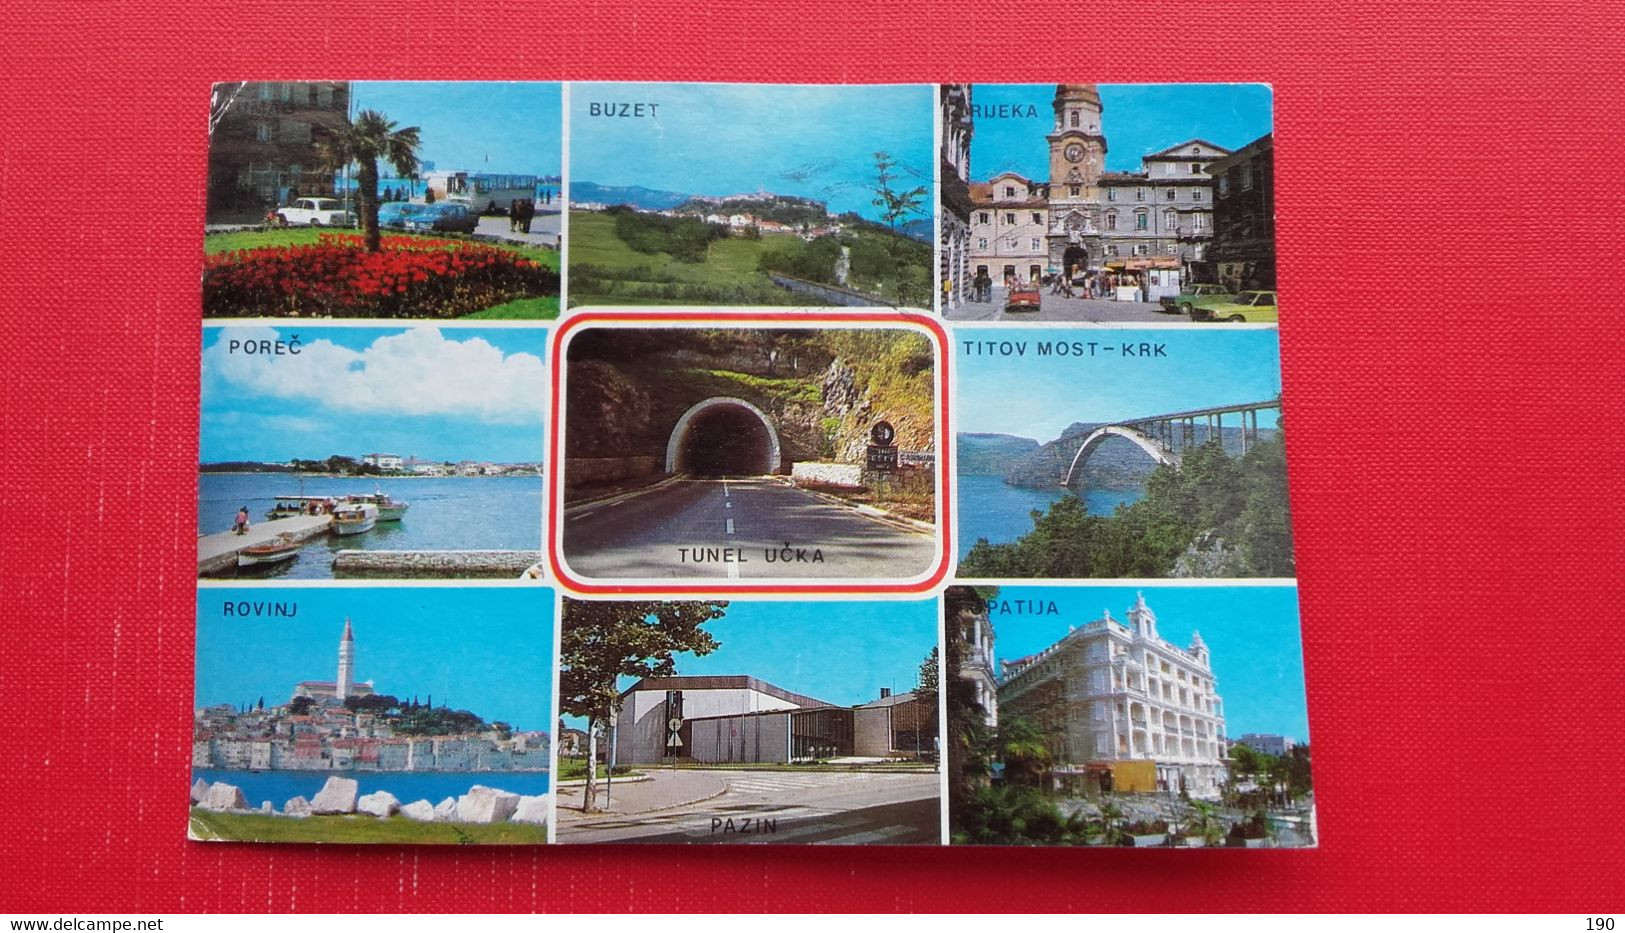 Buzet,Rijeka,tunel Ucka,Rovinj,Opatija,Krk(Titov Most),Porec,Umag - Croacia